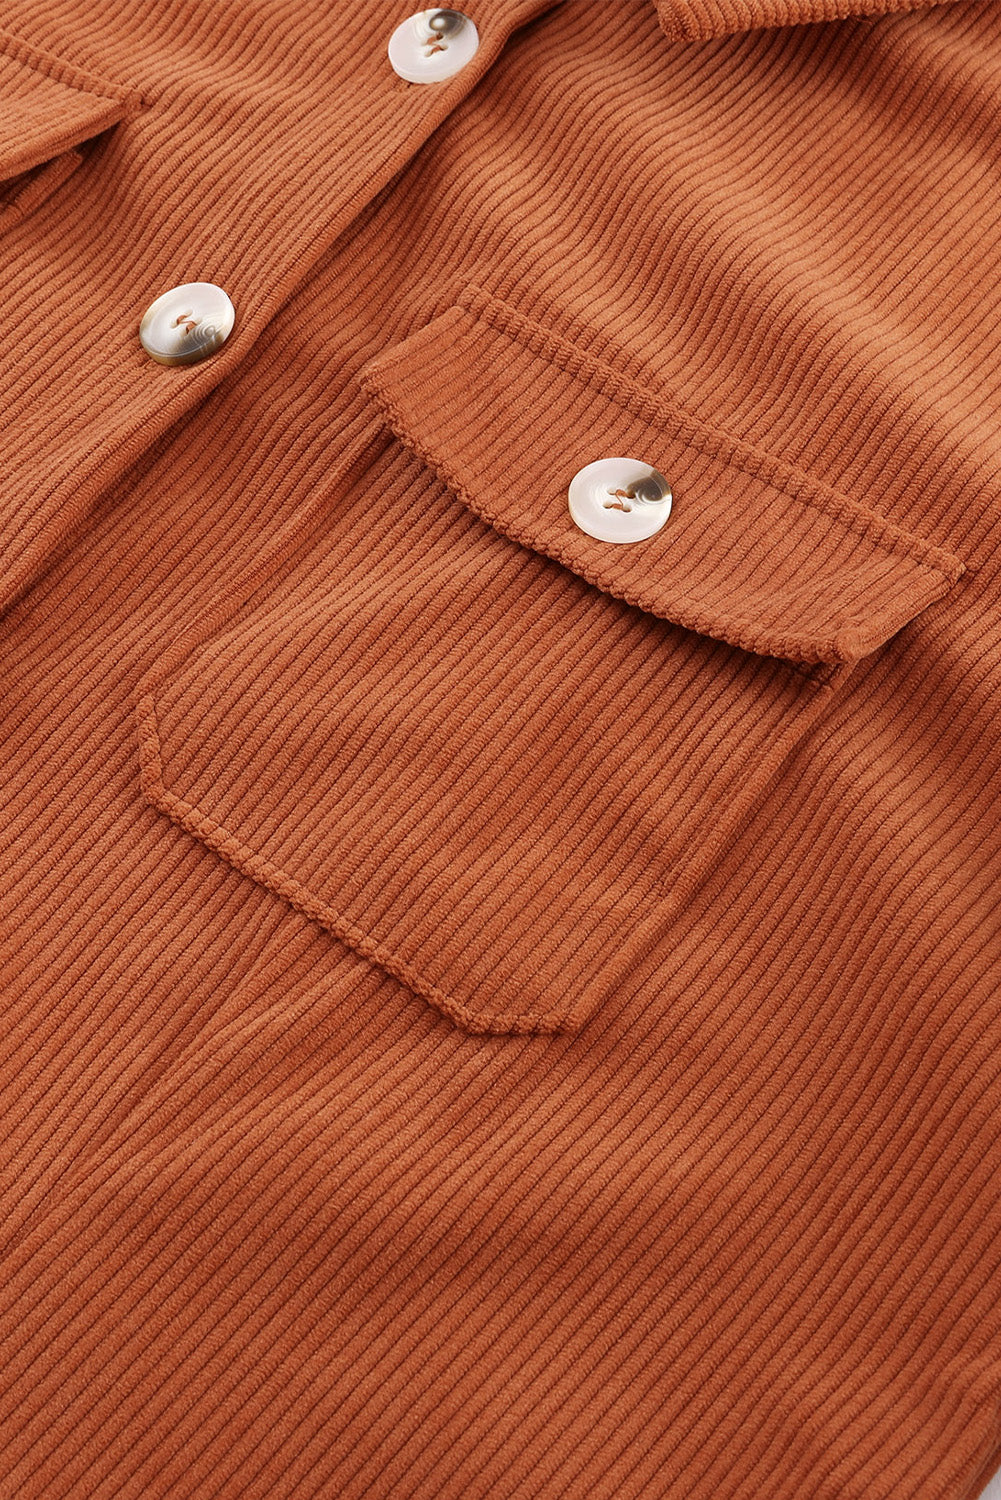 Khaki Corduroy Buttoned 	Long Sleeve Shirt Dress